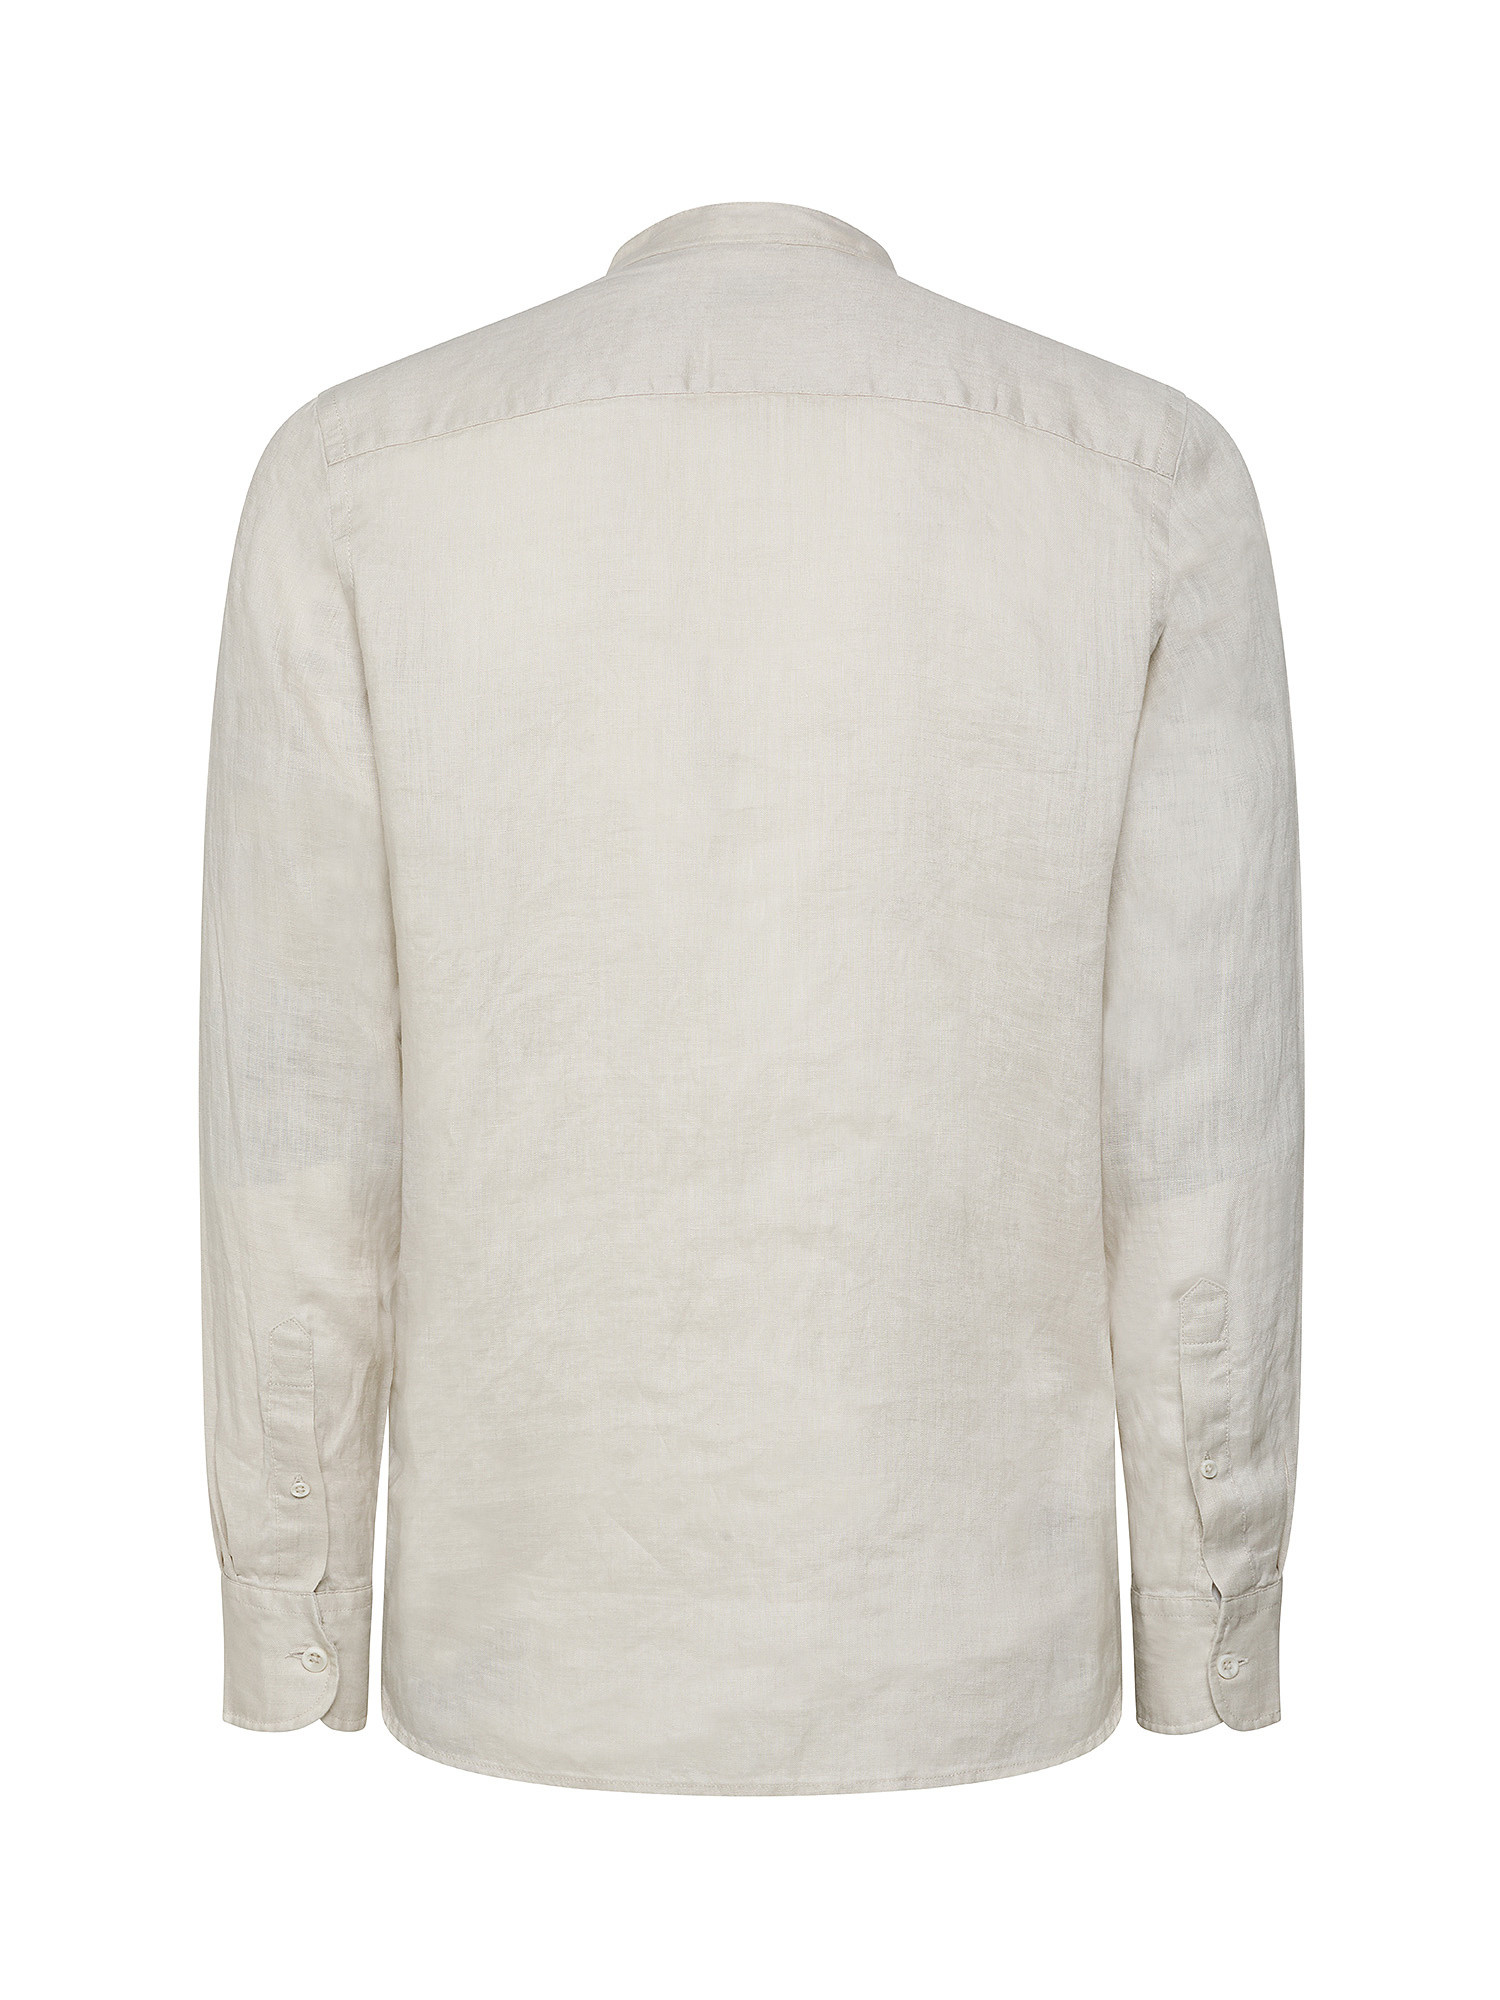 JCT - Pure linen Korean shirt, Sand, large image number 1